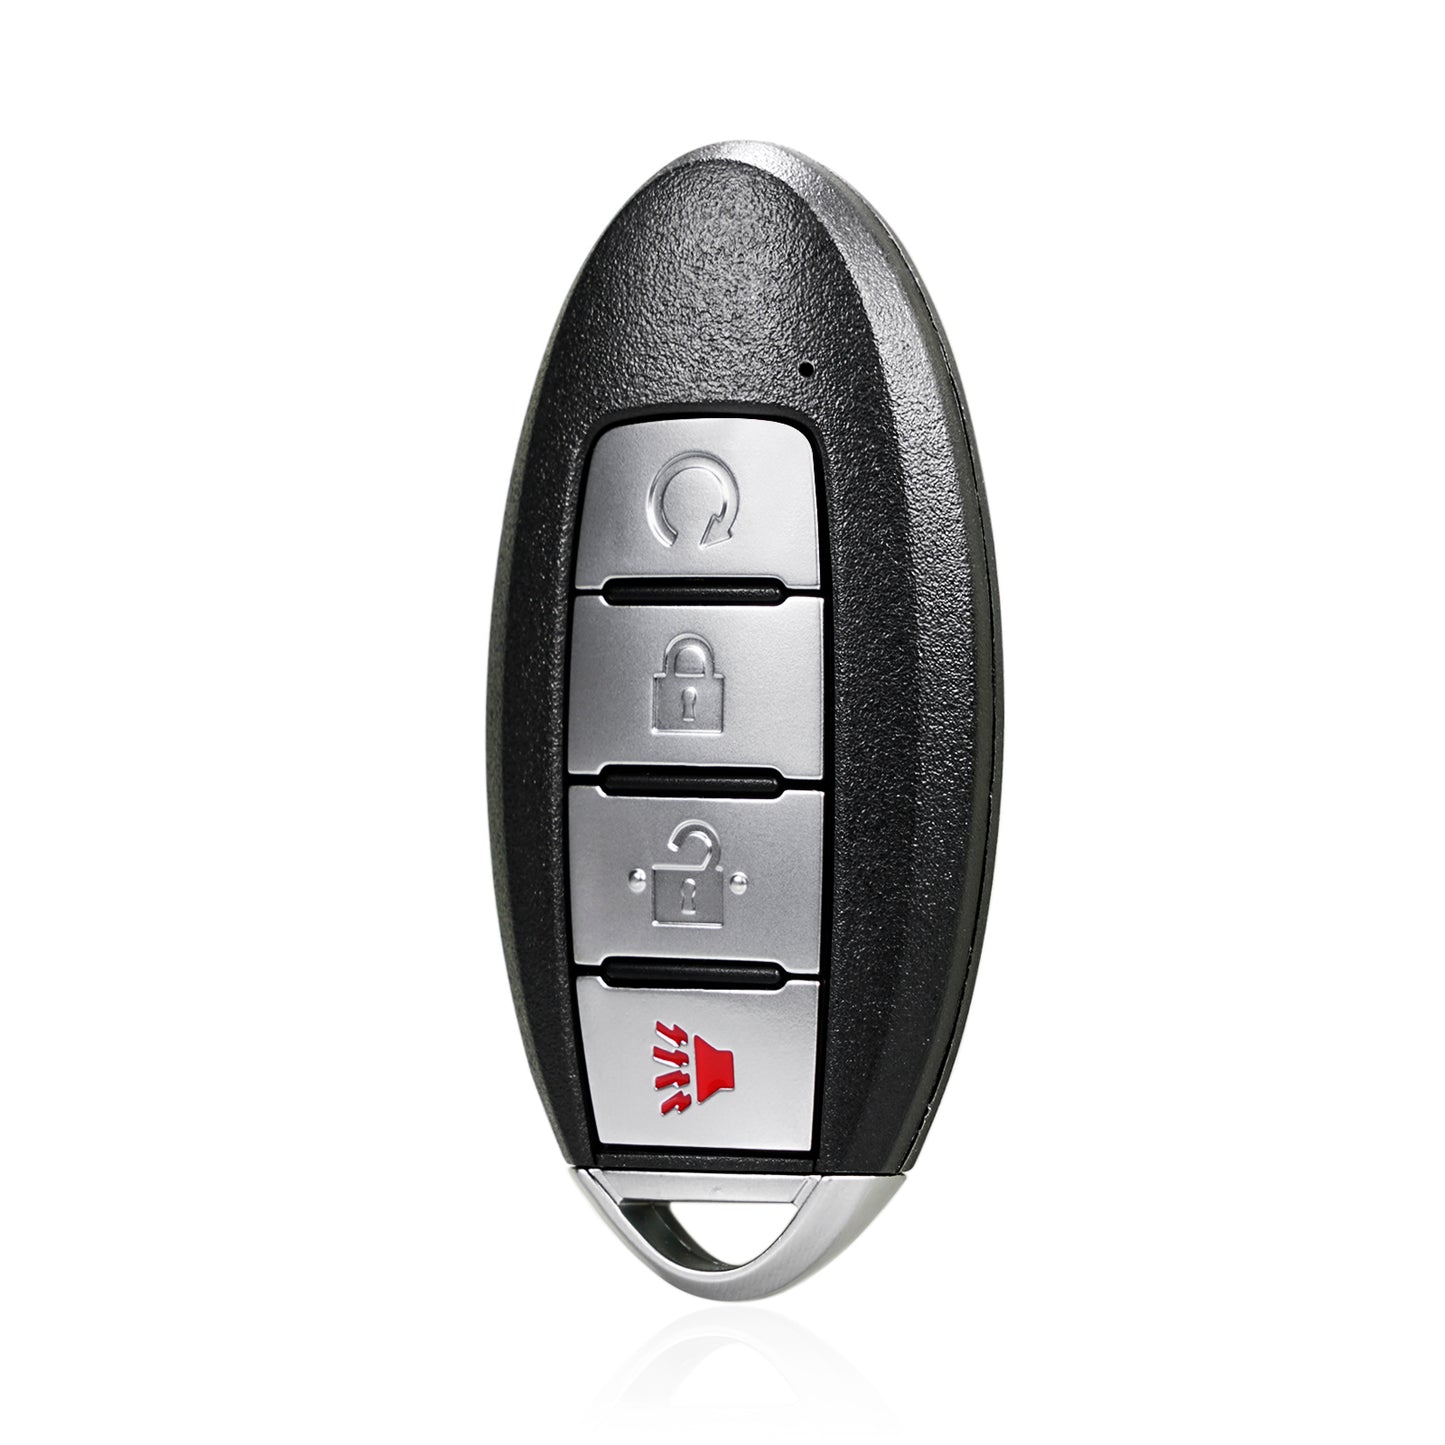 4 Buttons 434MHz Fob Entry Car Remote Key For 2019-2020 Nissan Murano Pathfinder Titan FCC ID : KR5TXN7 SKU : H700